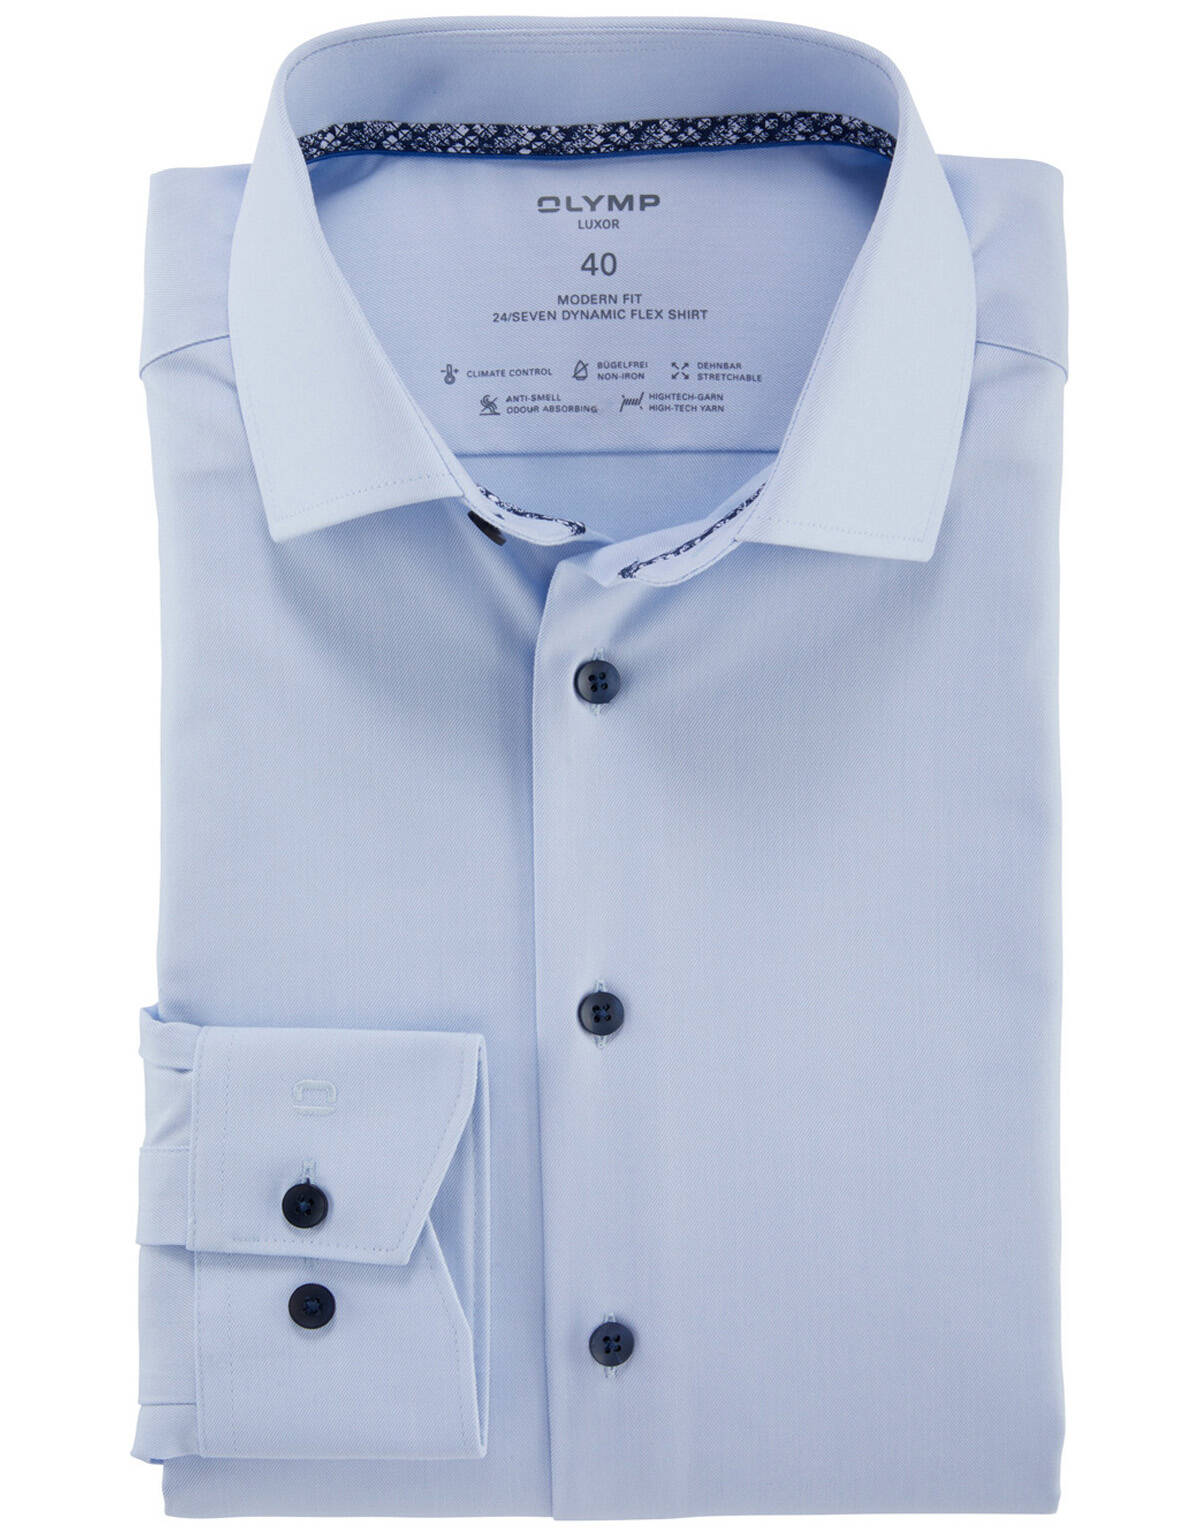 Рубашка OLYMP Luxor 24/7, modern fit, рост до 176[ГОЛУБОЙ]